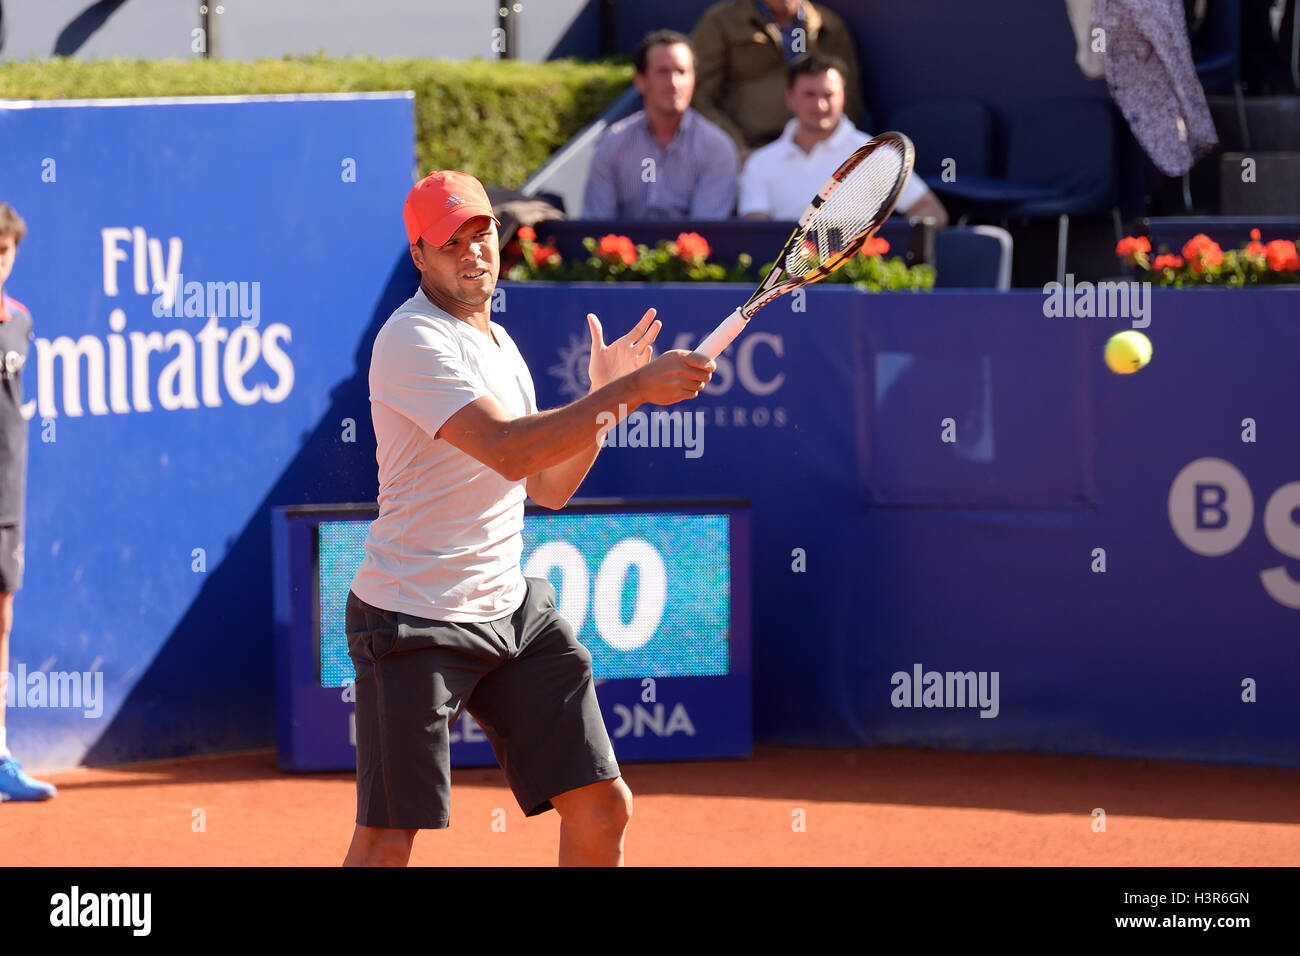 Barcellona - 22 APR: Jo Wilfried Tsonga (francese giocatore di tennis) svolge in ATP Barcelona Open Banc Sabadell. Foto Stock